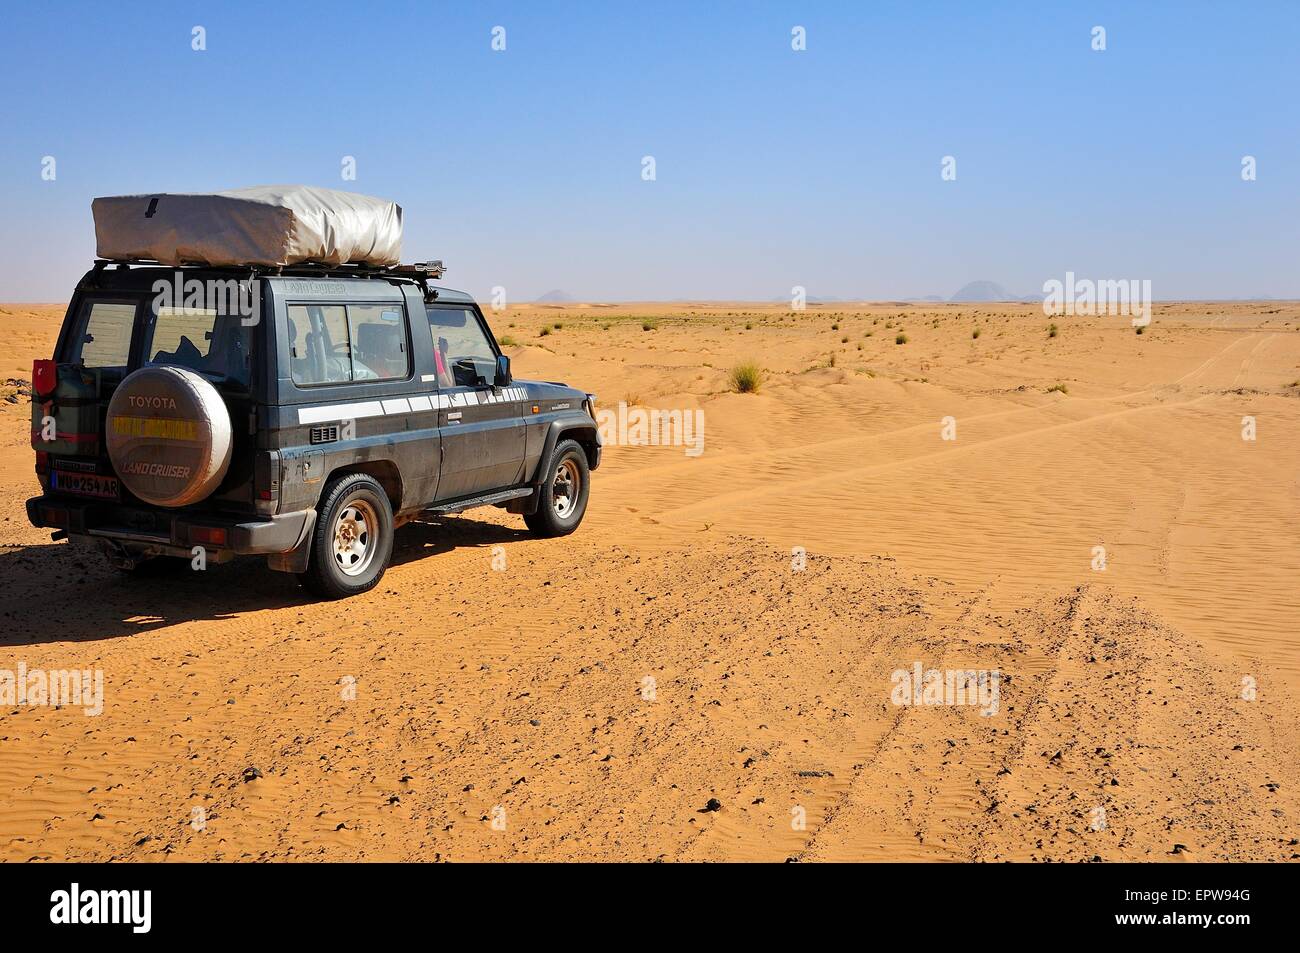 All-terrain vehicle with a roof tent on the dirt track, Aicha monolith behind, Adrar region, Mauritania Stock Photo